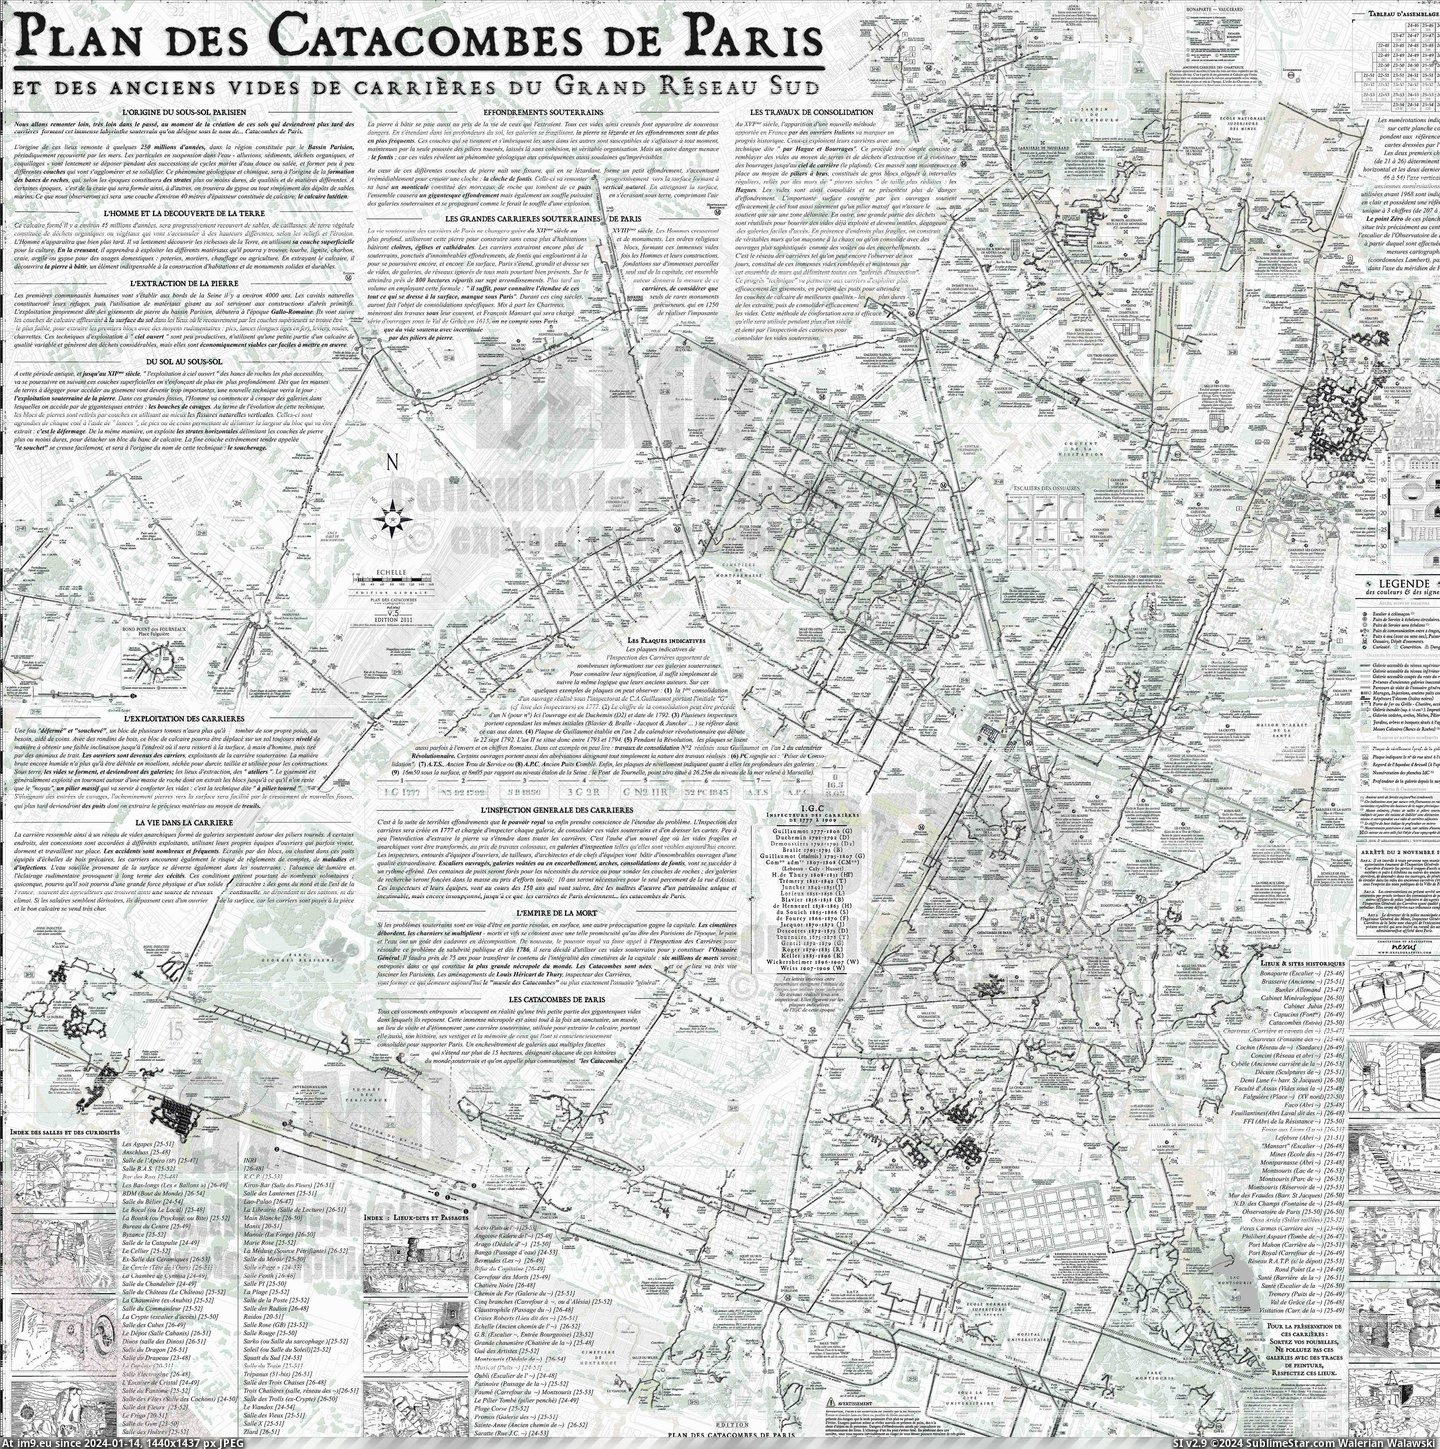 #Paris  #Catacombs [Mapporn] Catacombs of Paris [5888x5888] Pic. (Изображение из альбом My r/MAPS favs))